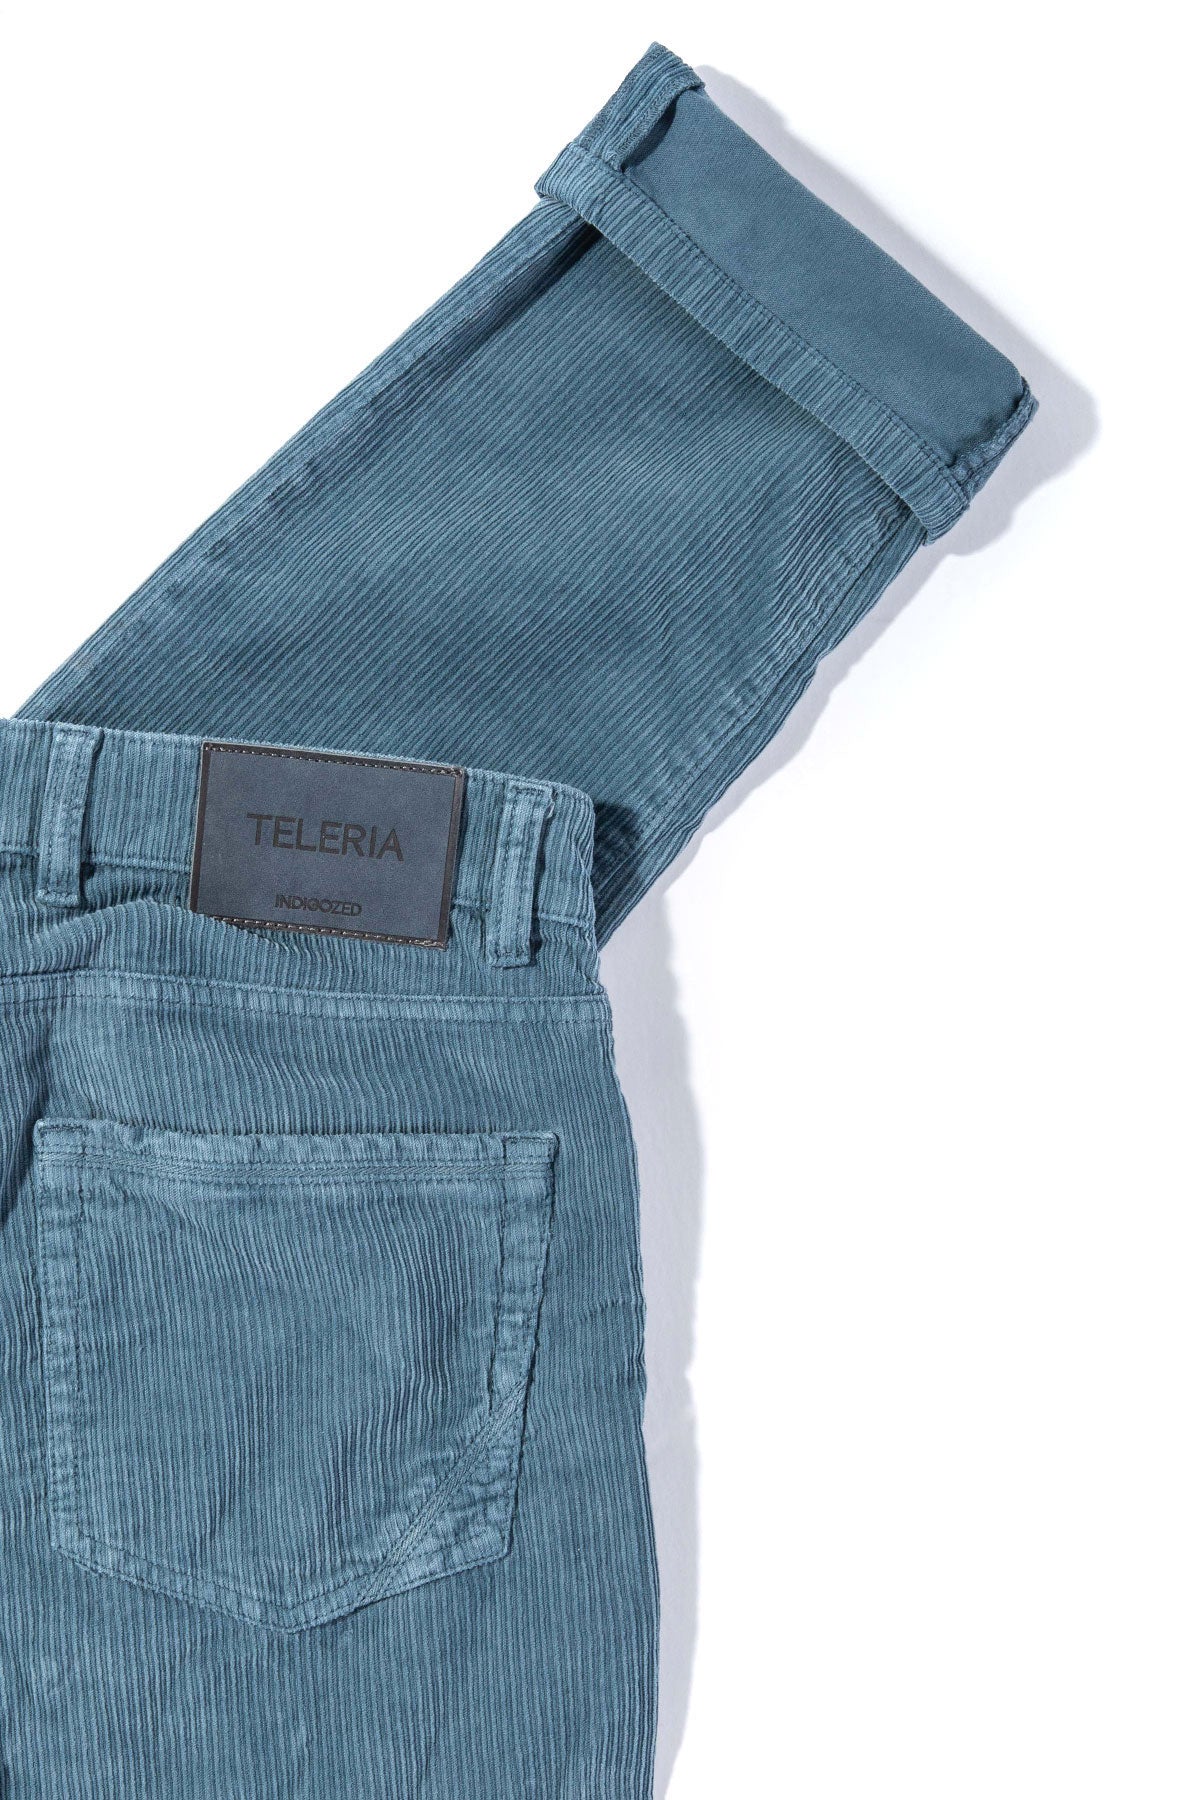 Payson Cord Pants in Niagra | Mens - Pants - 5 Pocket | Teleria Zed